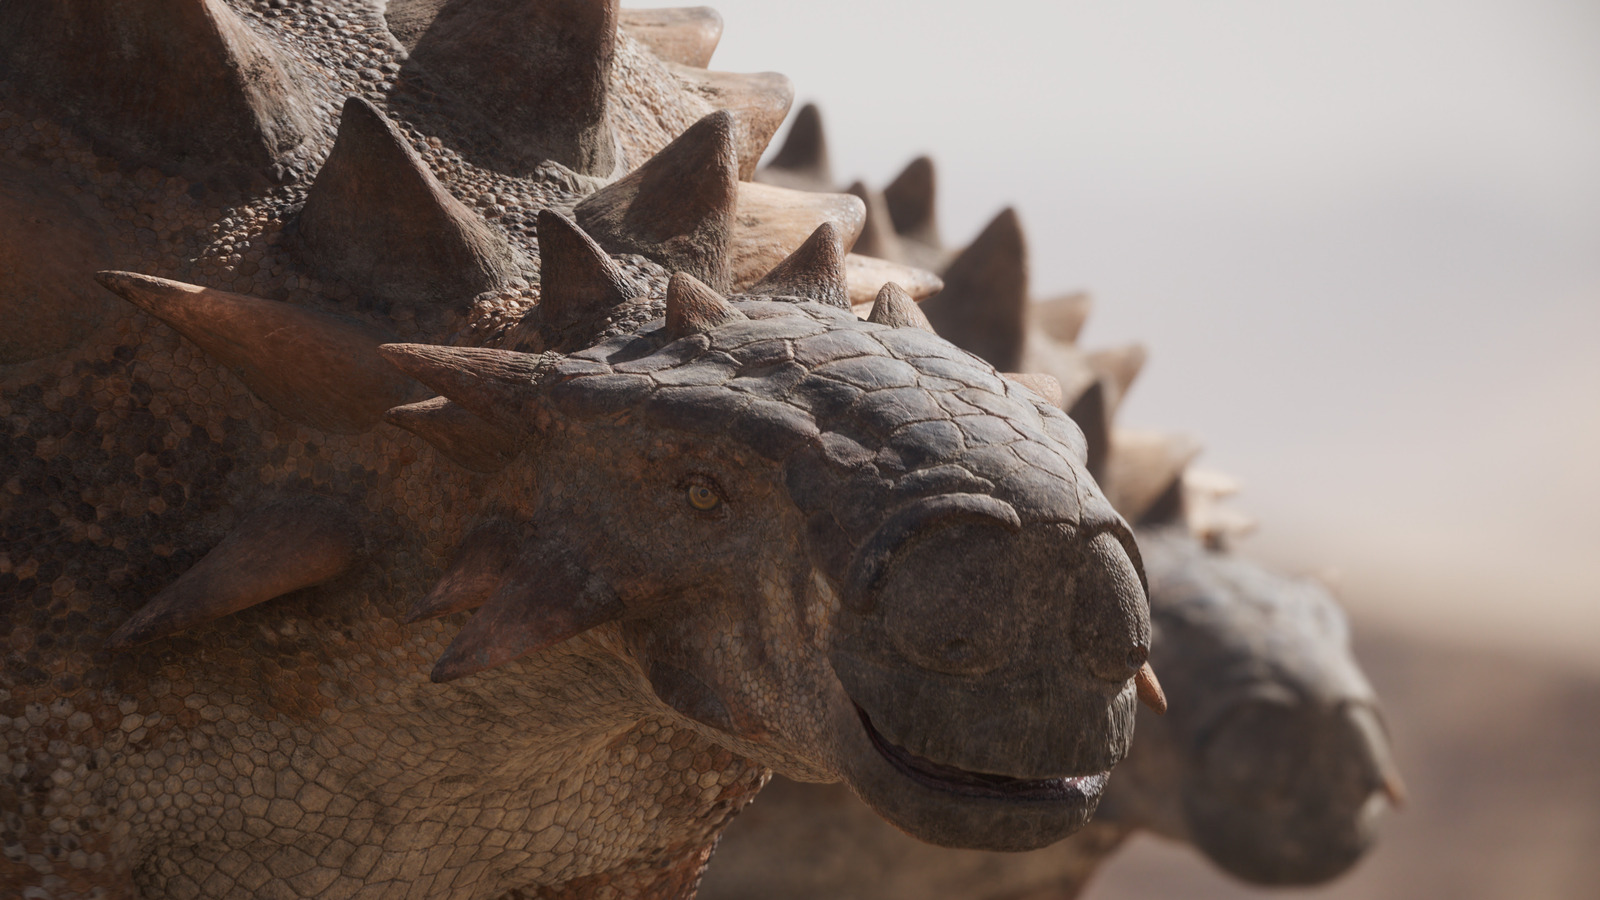 Season 2 of Prehistoric Planet announced by Apple TV+